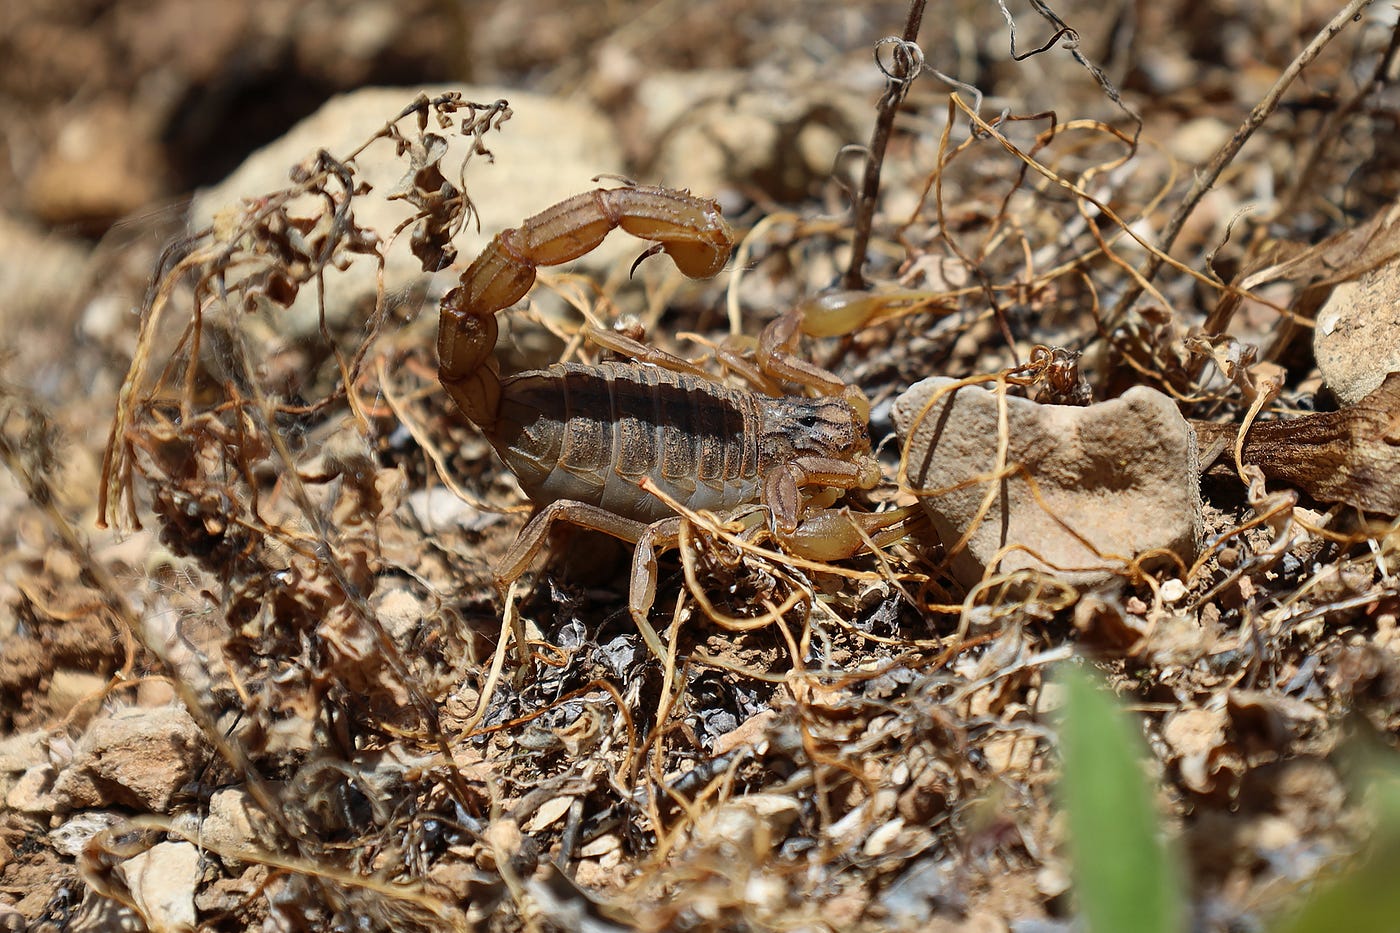 Healing compounds in scorpion venom